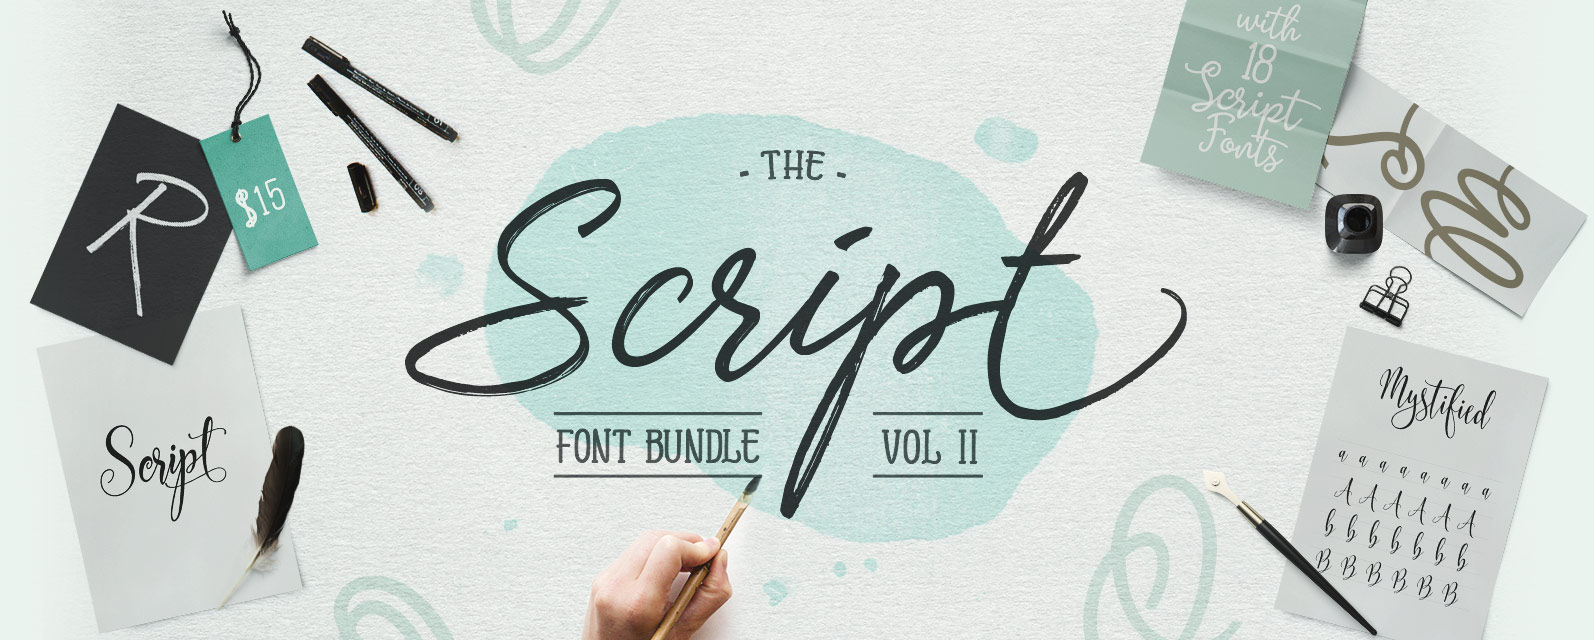 The-Script-Font-Bundle-Vol2-Main-Cover.jpg